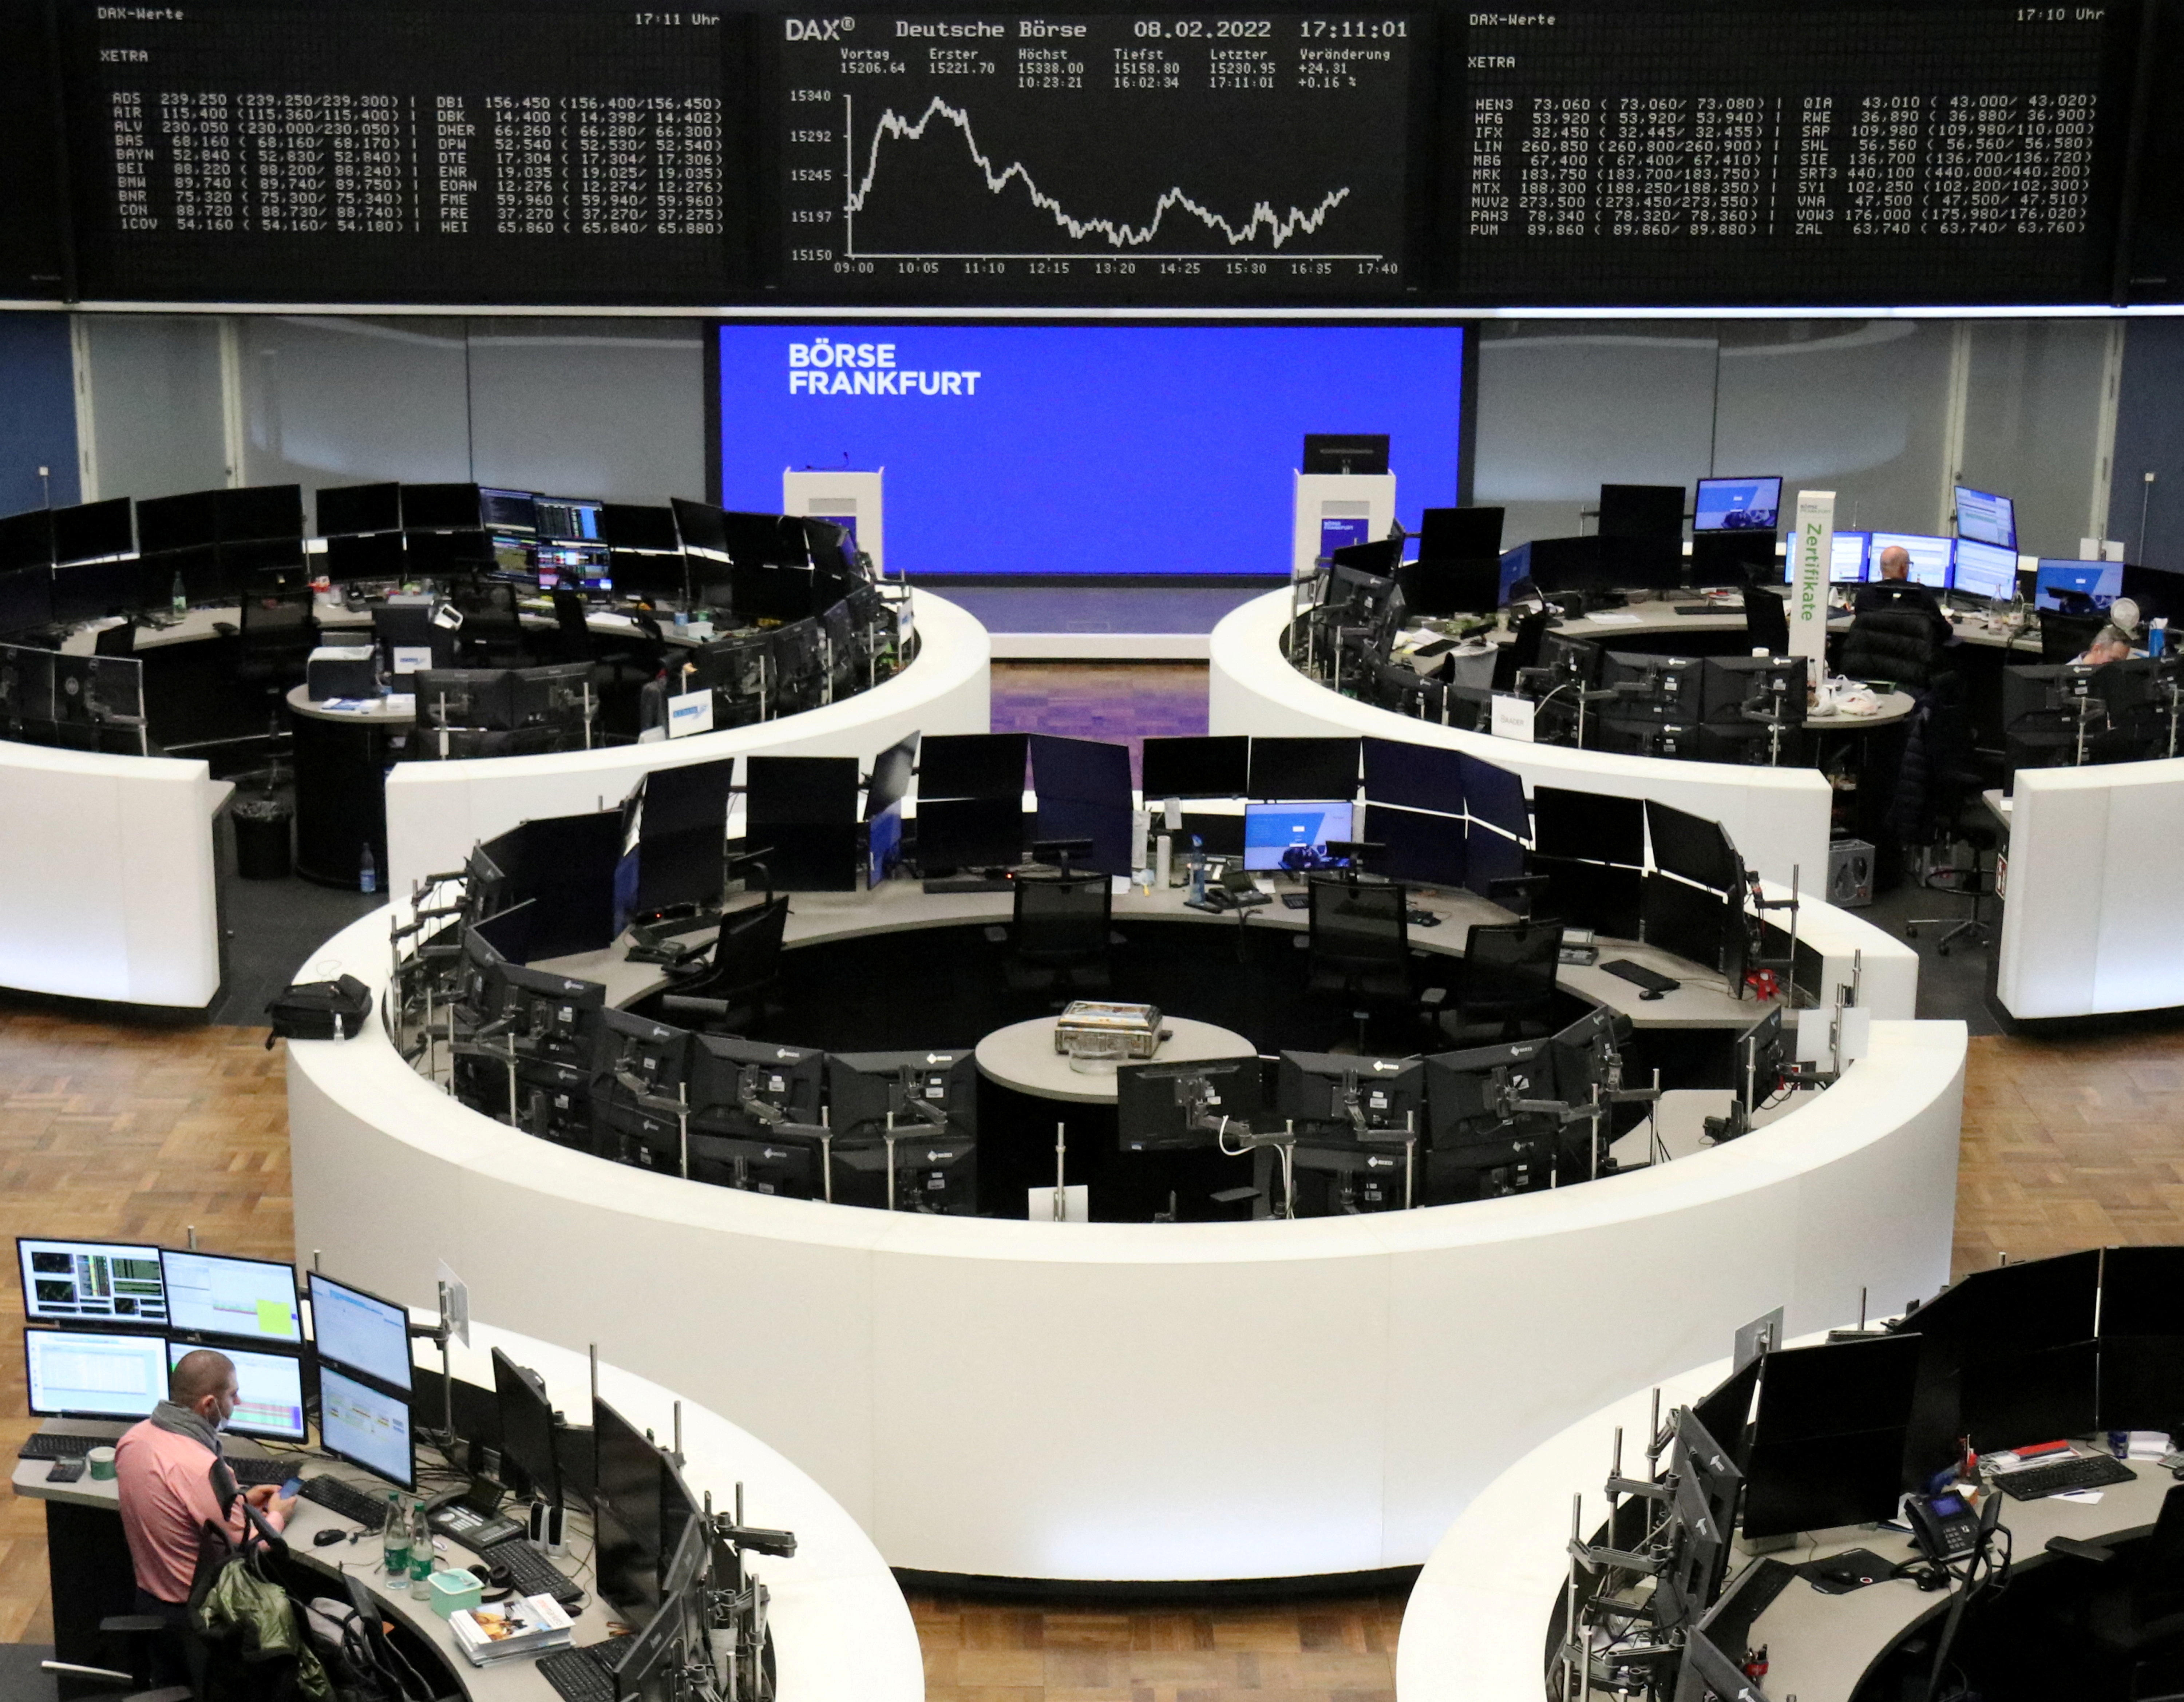 View of the Frankfurt stock exchange